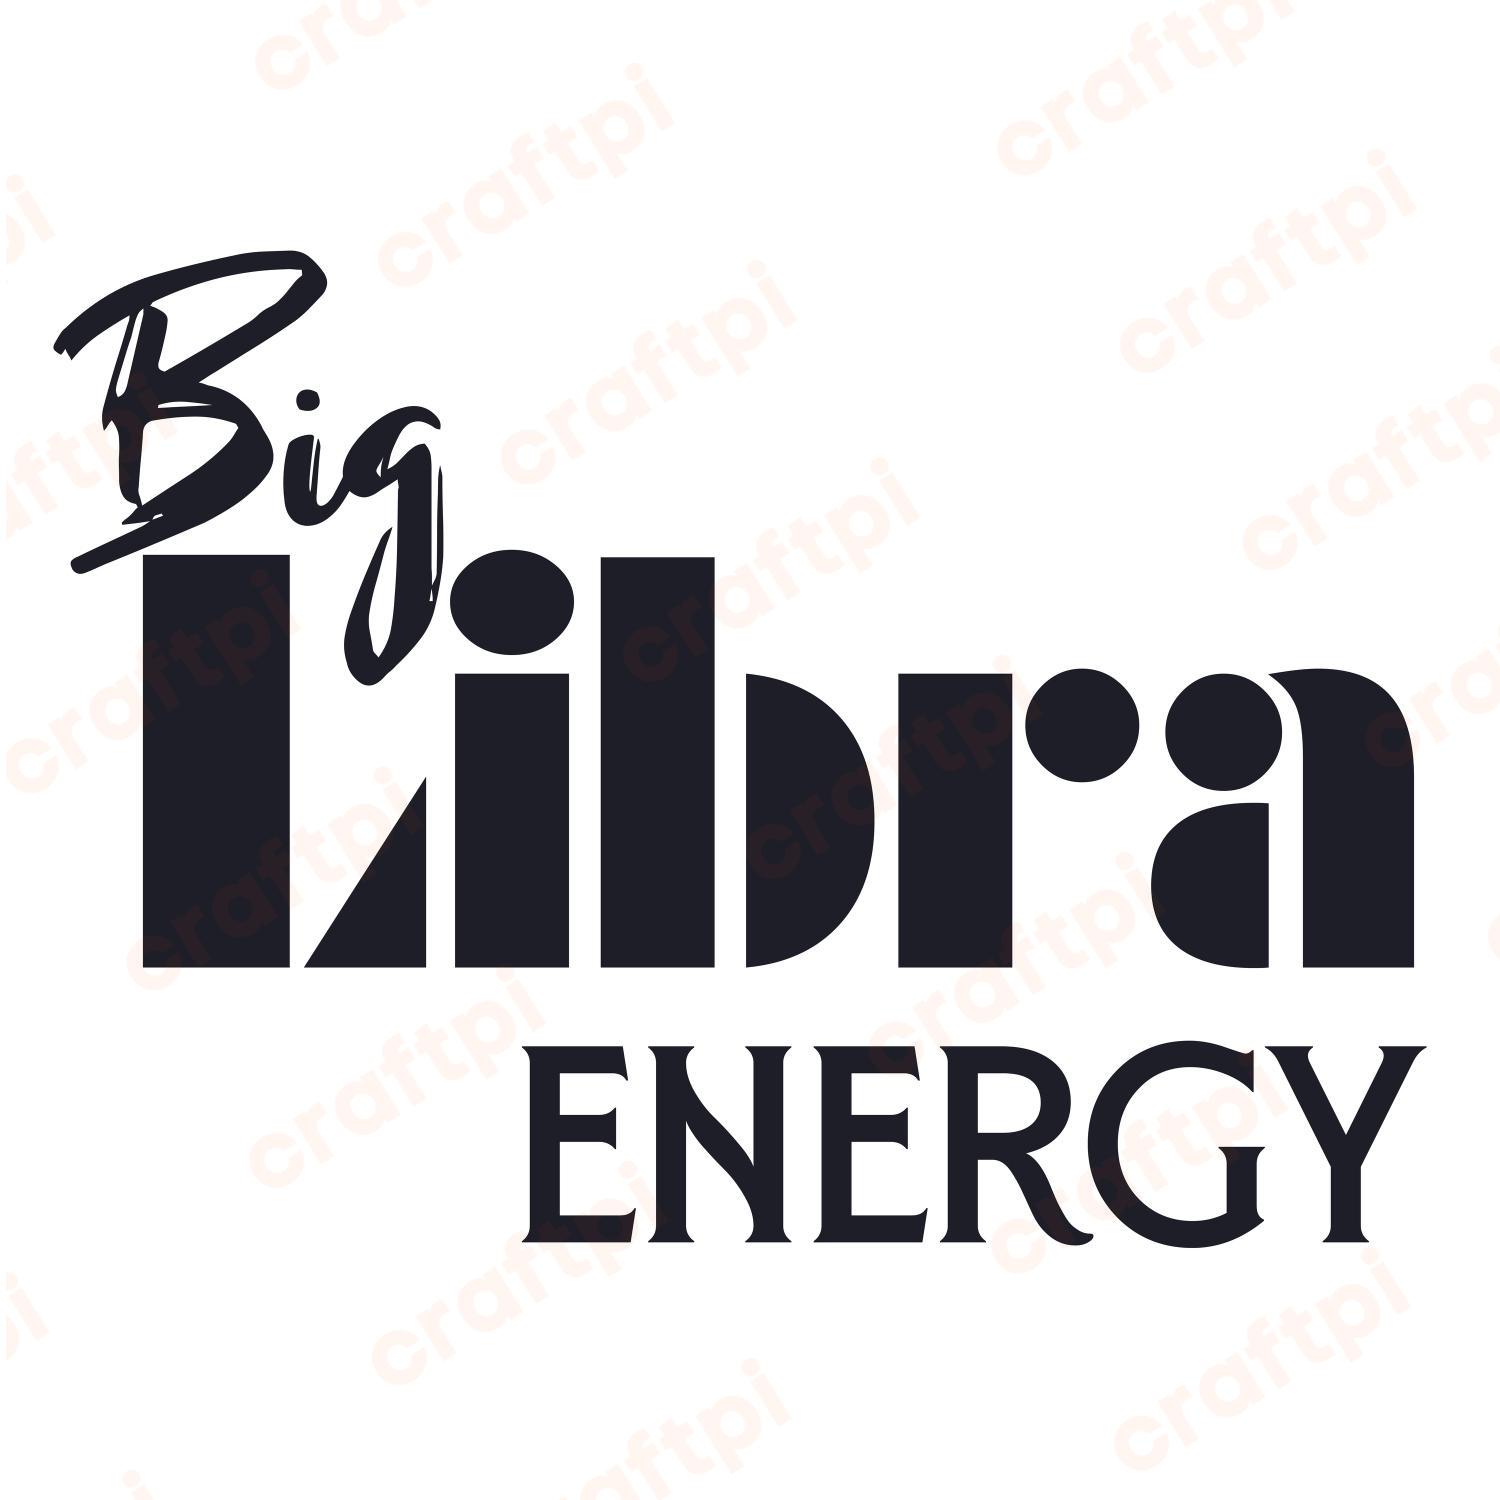 Big Libra Energy SVG, PNG, JPG, PSD, PDF Files